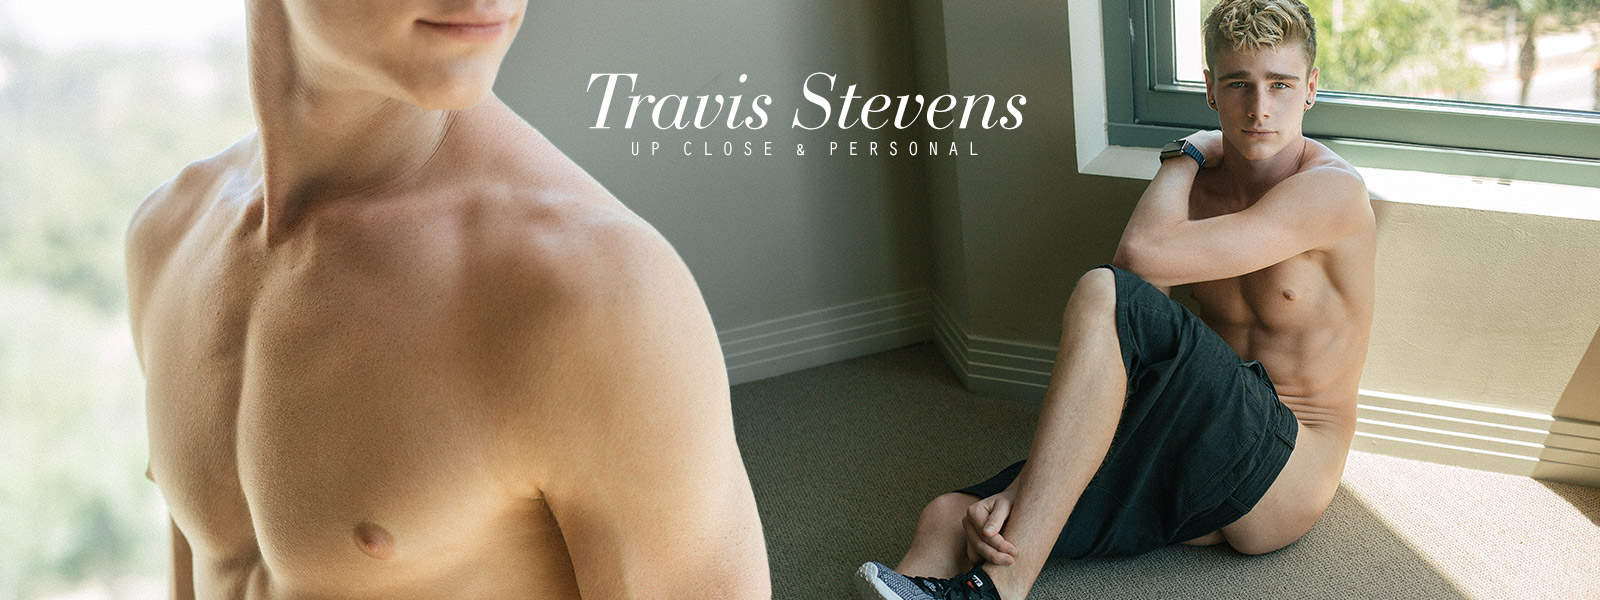 Travis Stevens Up Close & Personal